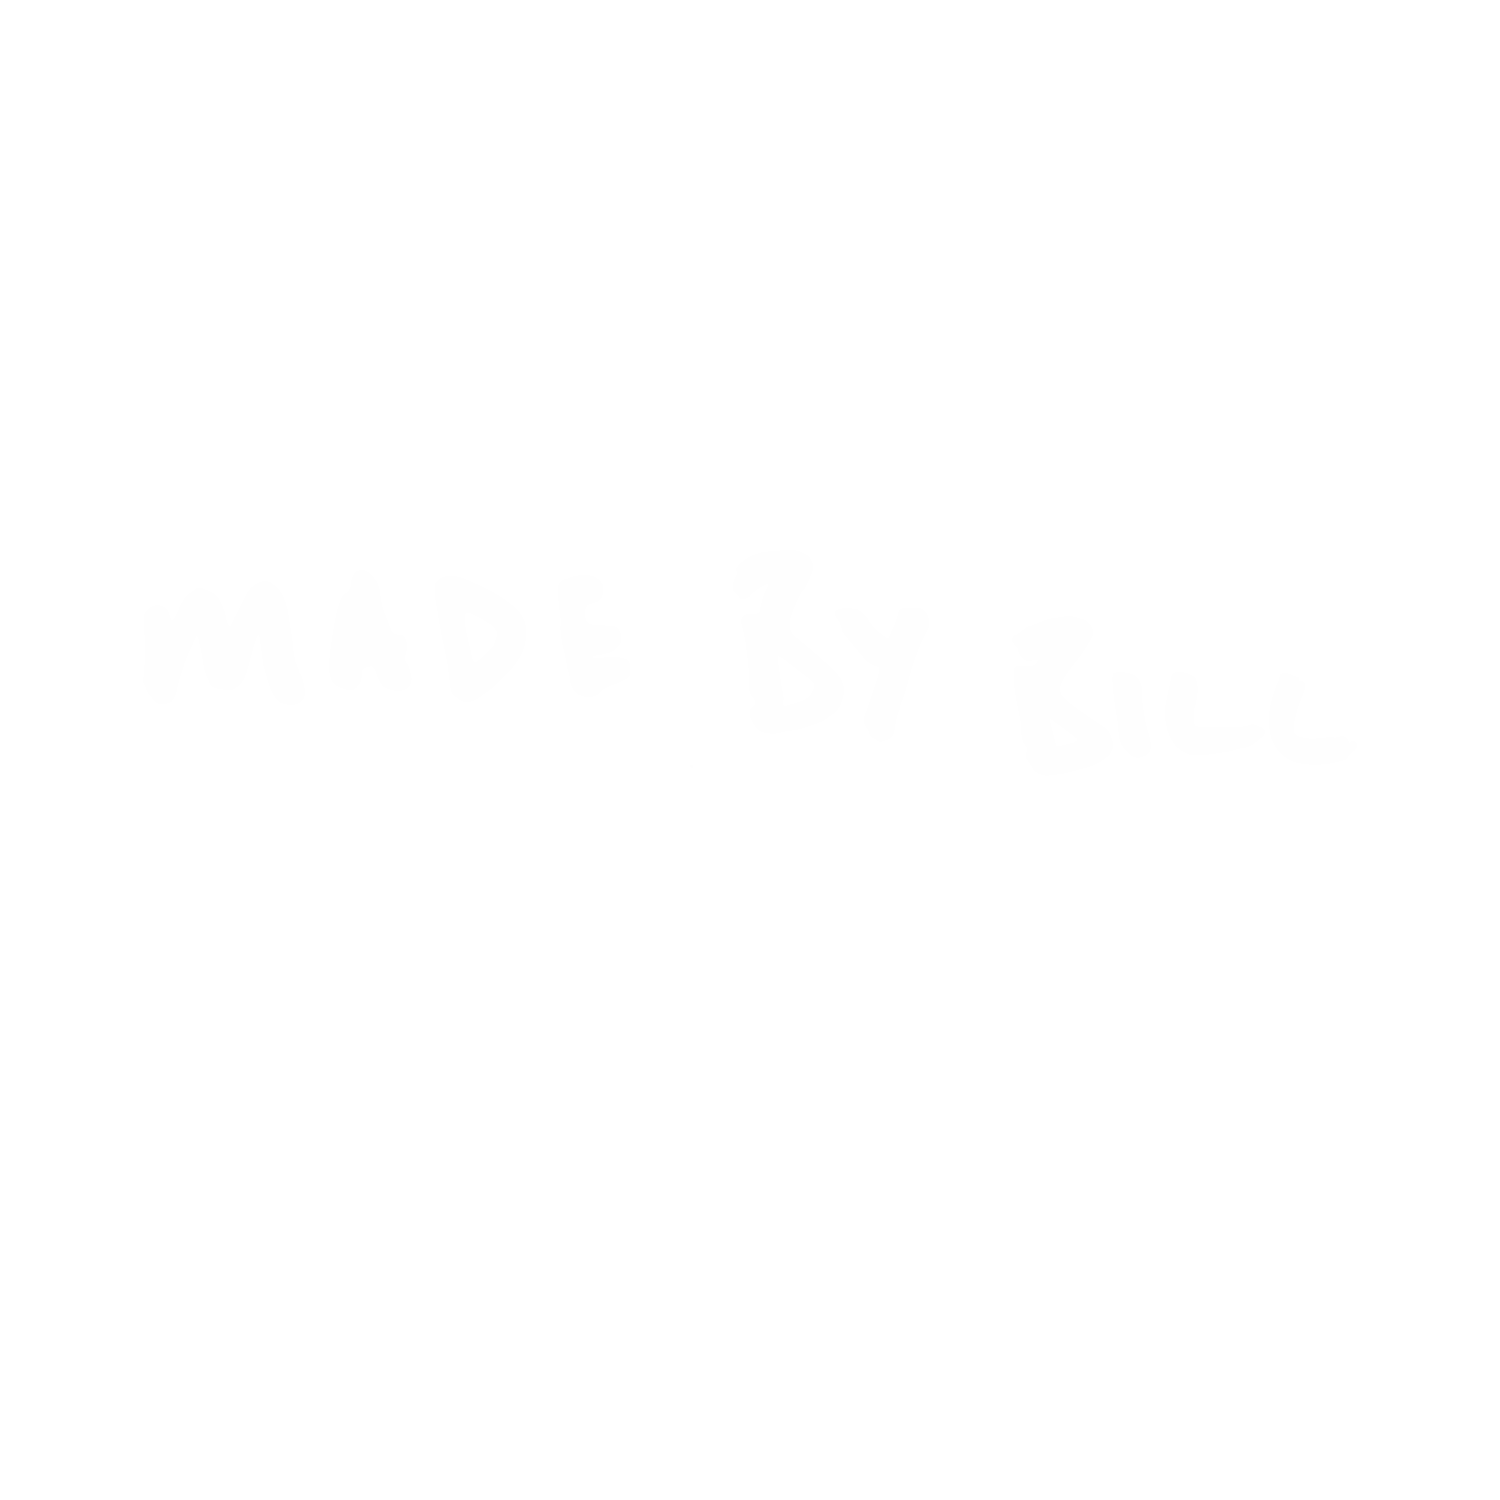 made by bill 